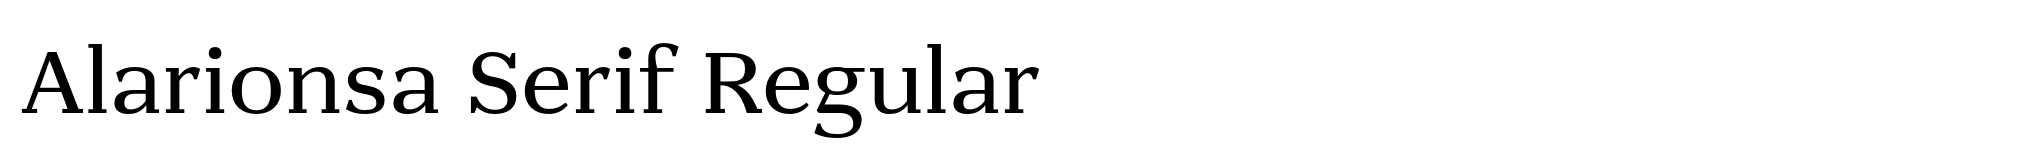 Alarionsa Serif Regular image